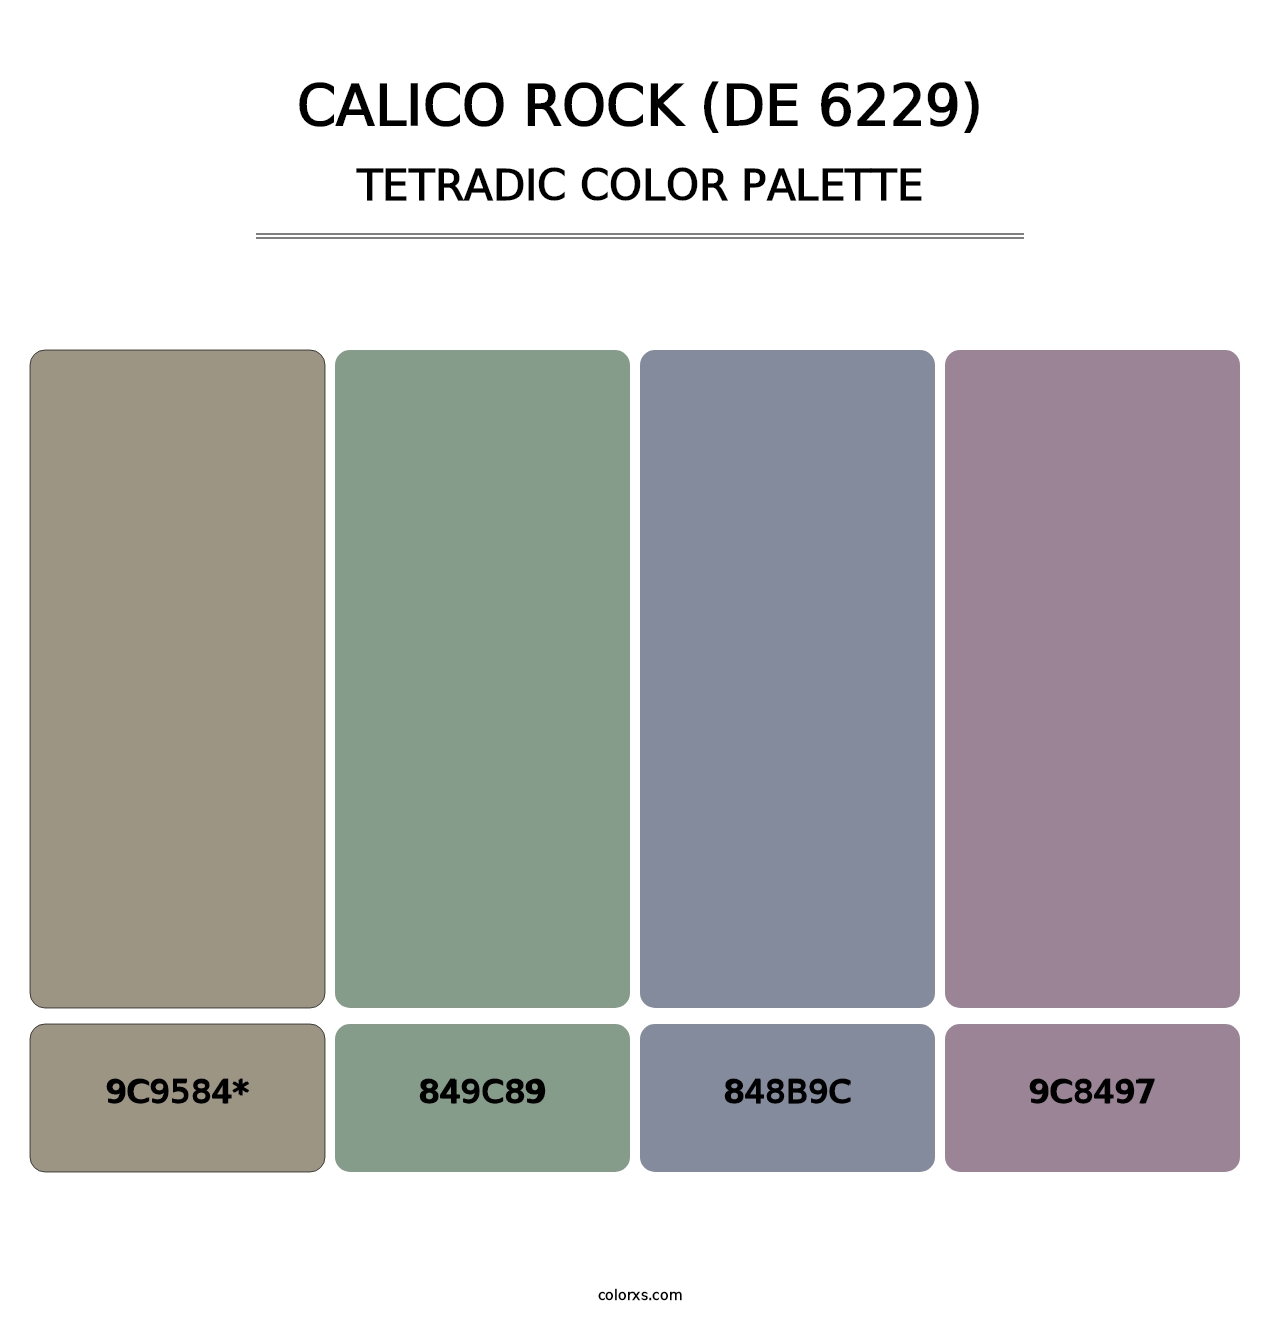 Calico Rock (DE 6229) - Tetradic Color Palette